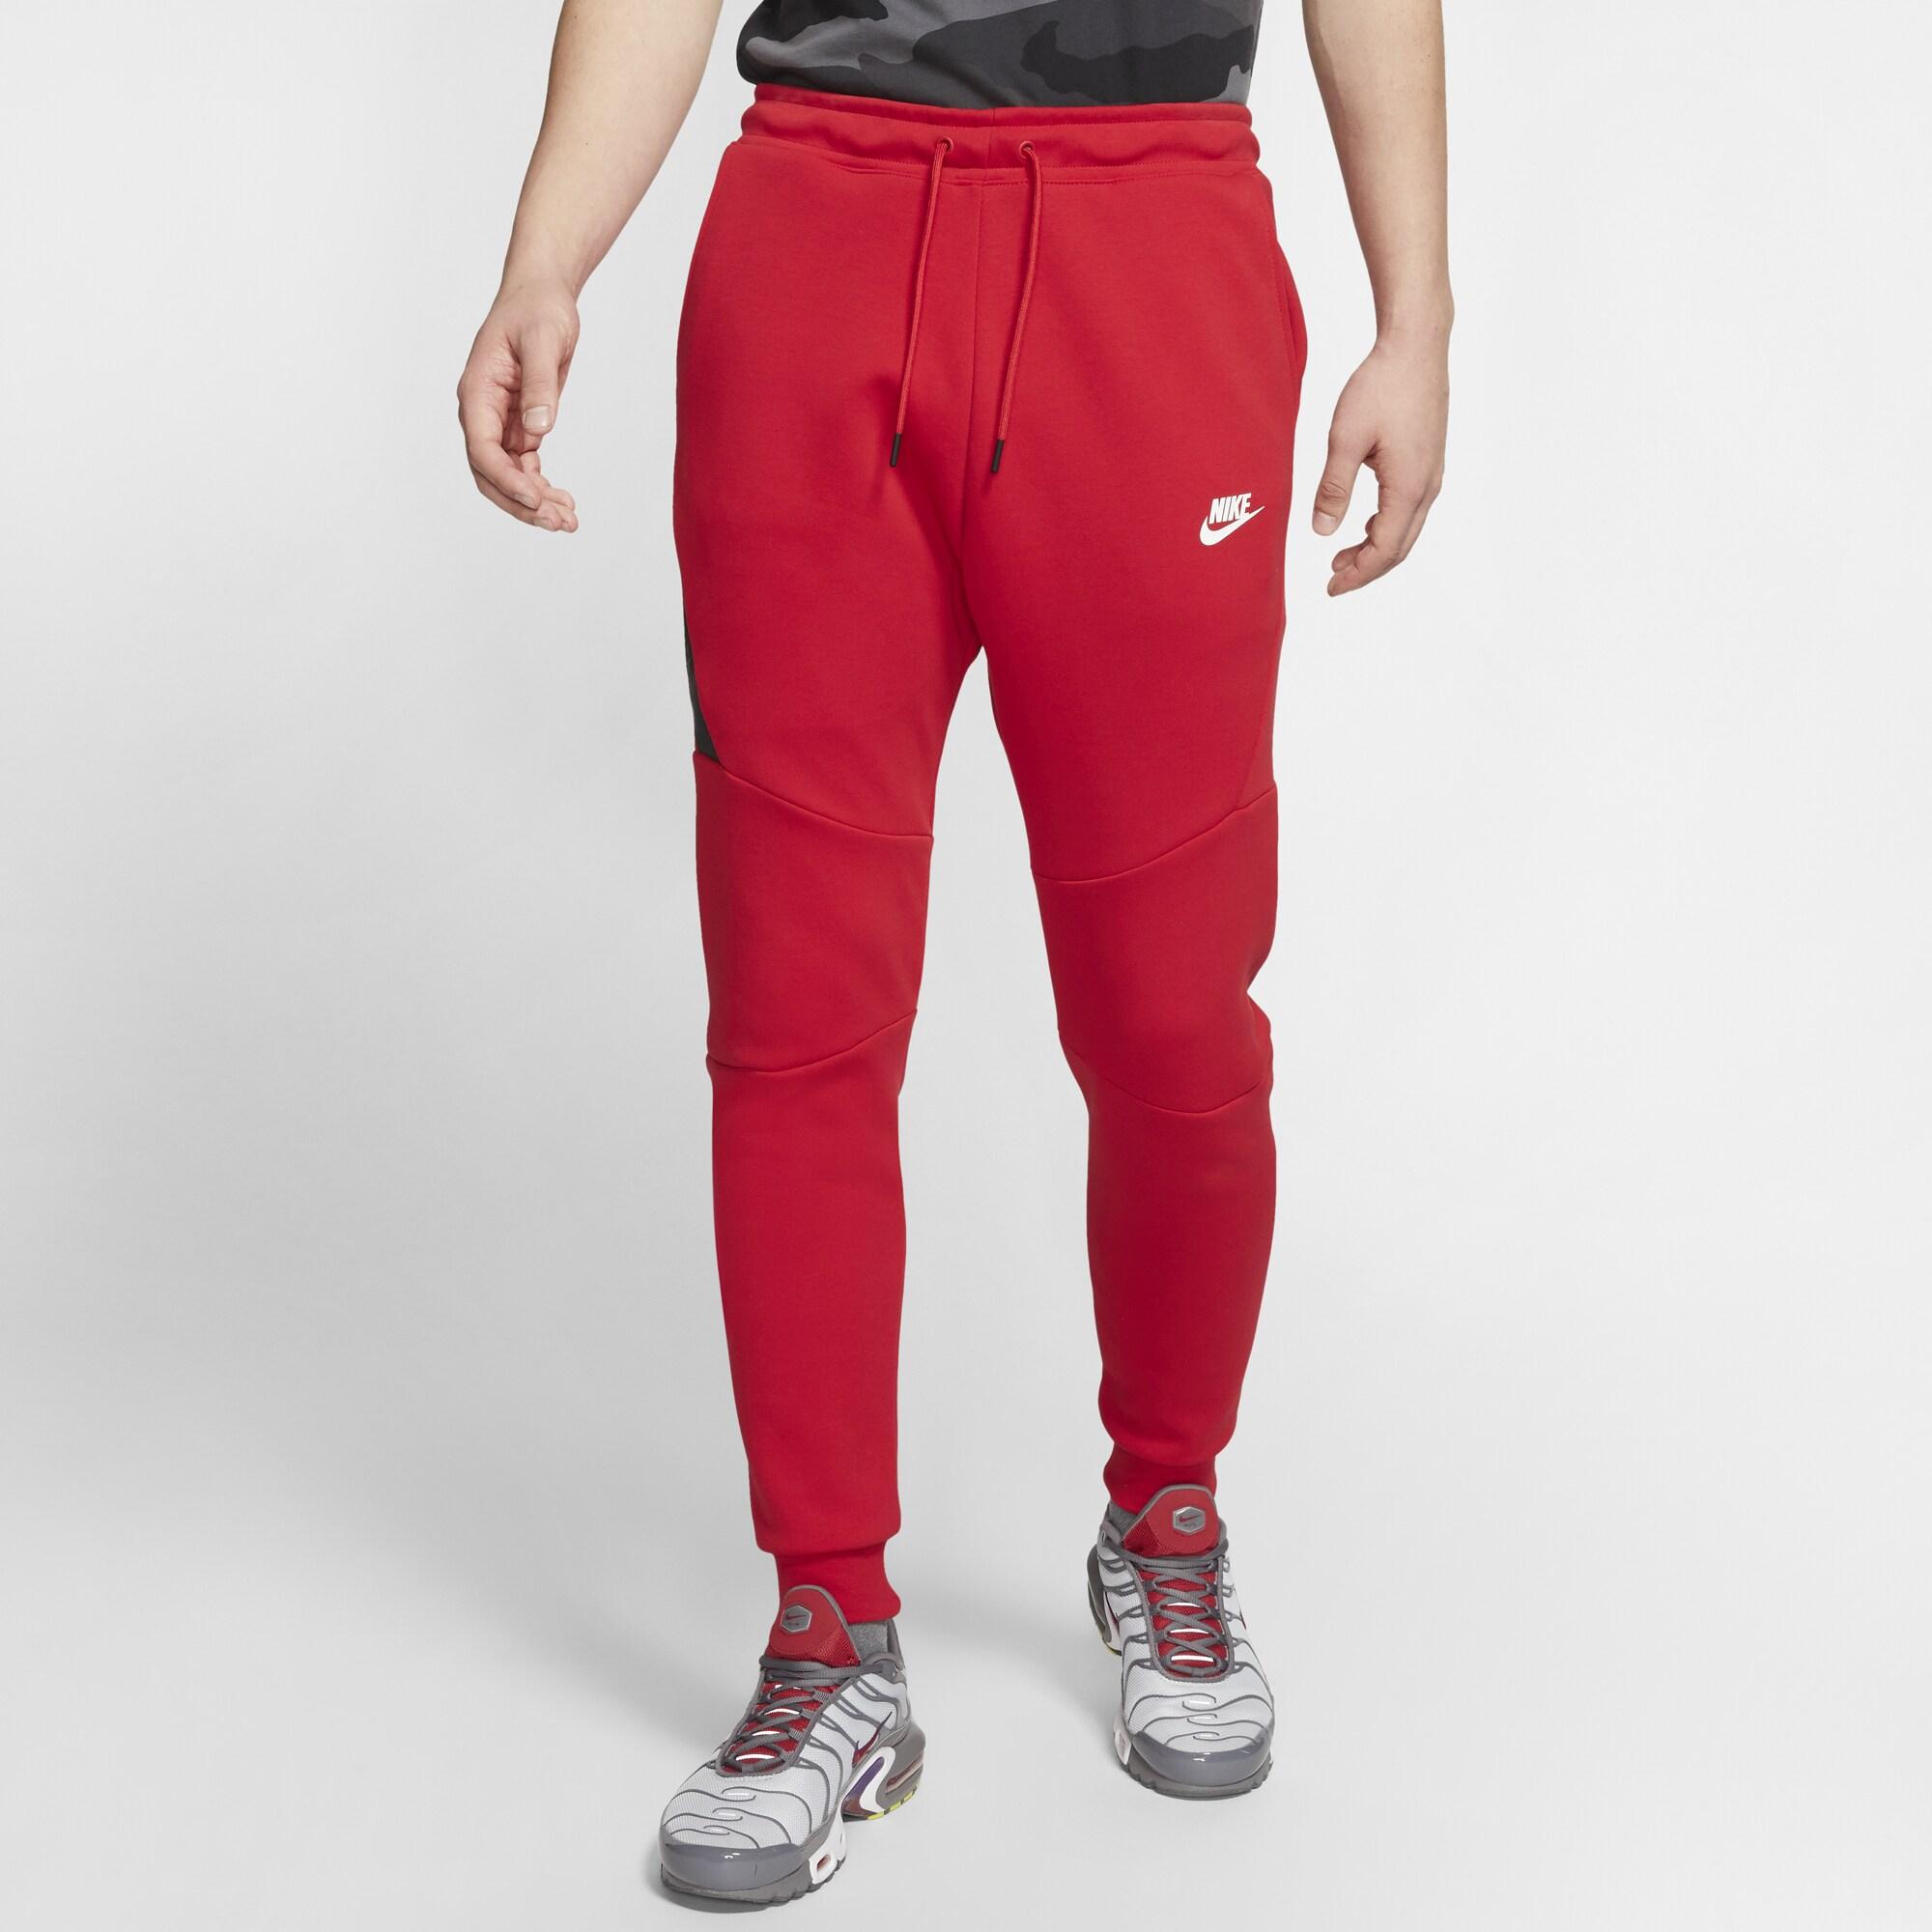 Nike Tech Fleece Joggers in University Red/White (Red) for Men - Lyst